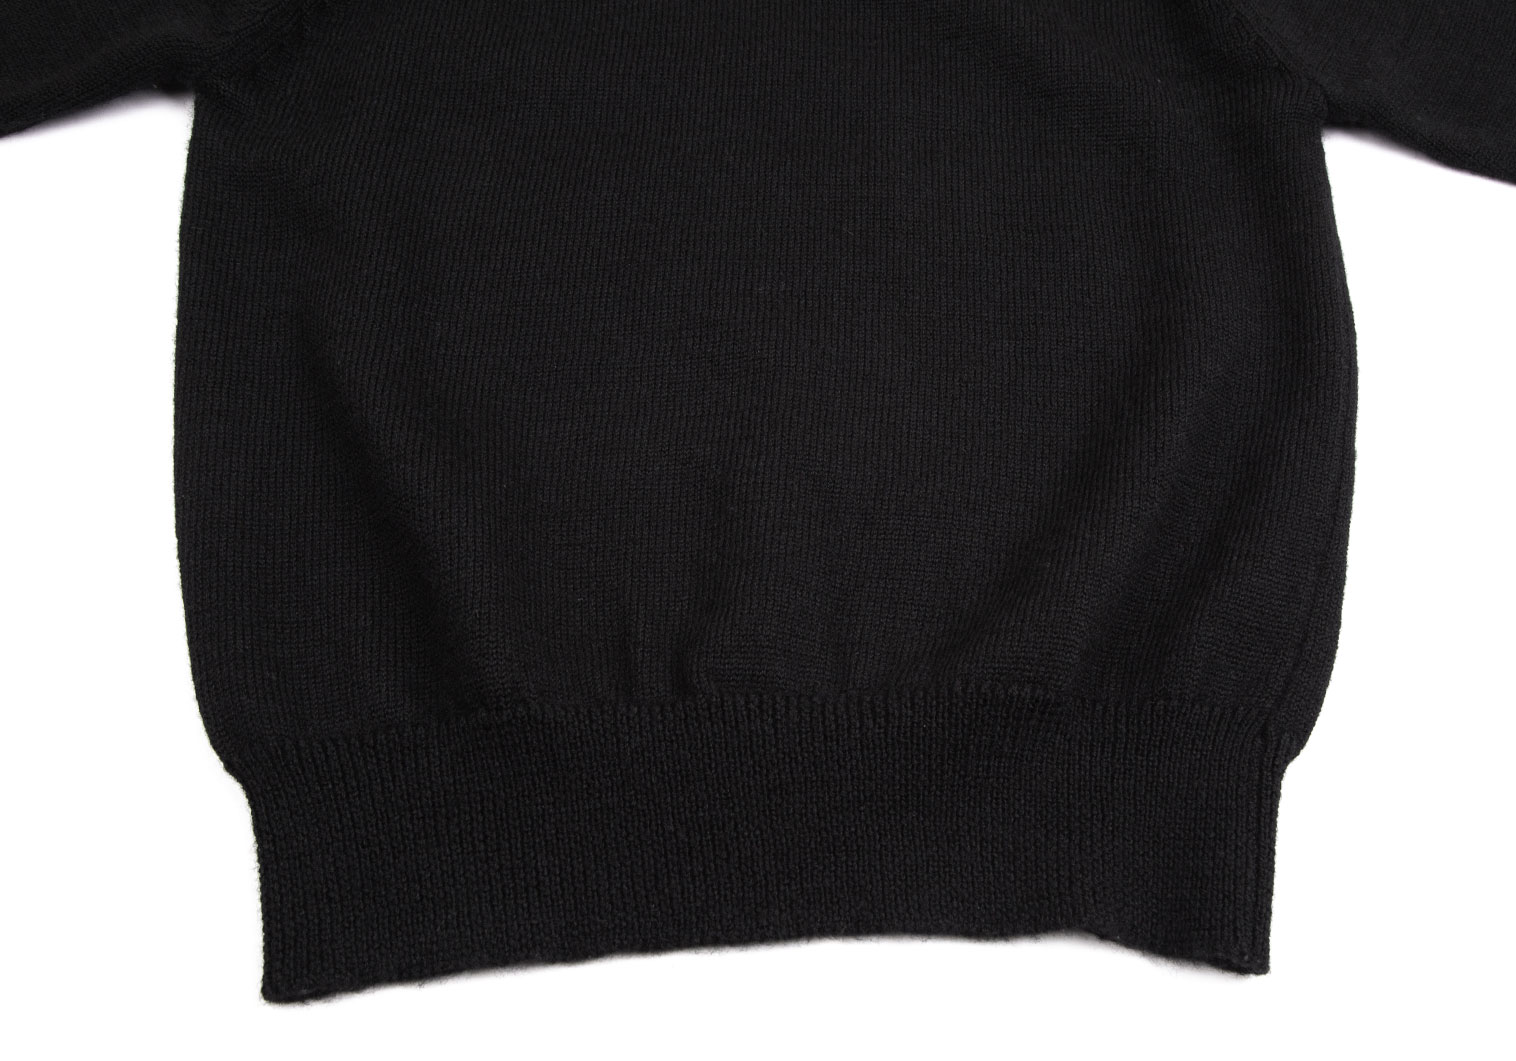 39sformenサイズY's for men ワイズフォーメン 初期 デザインニット セーター 黒